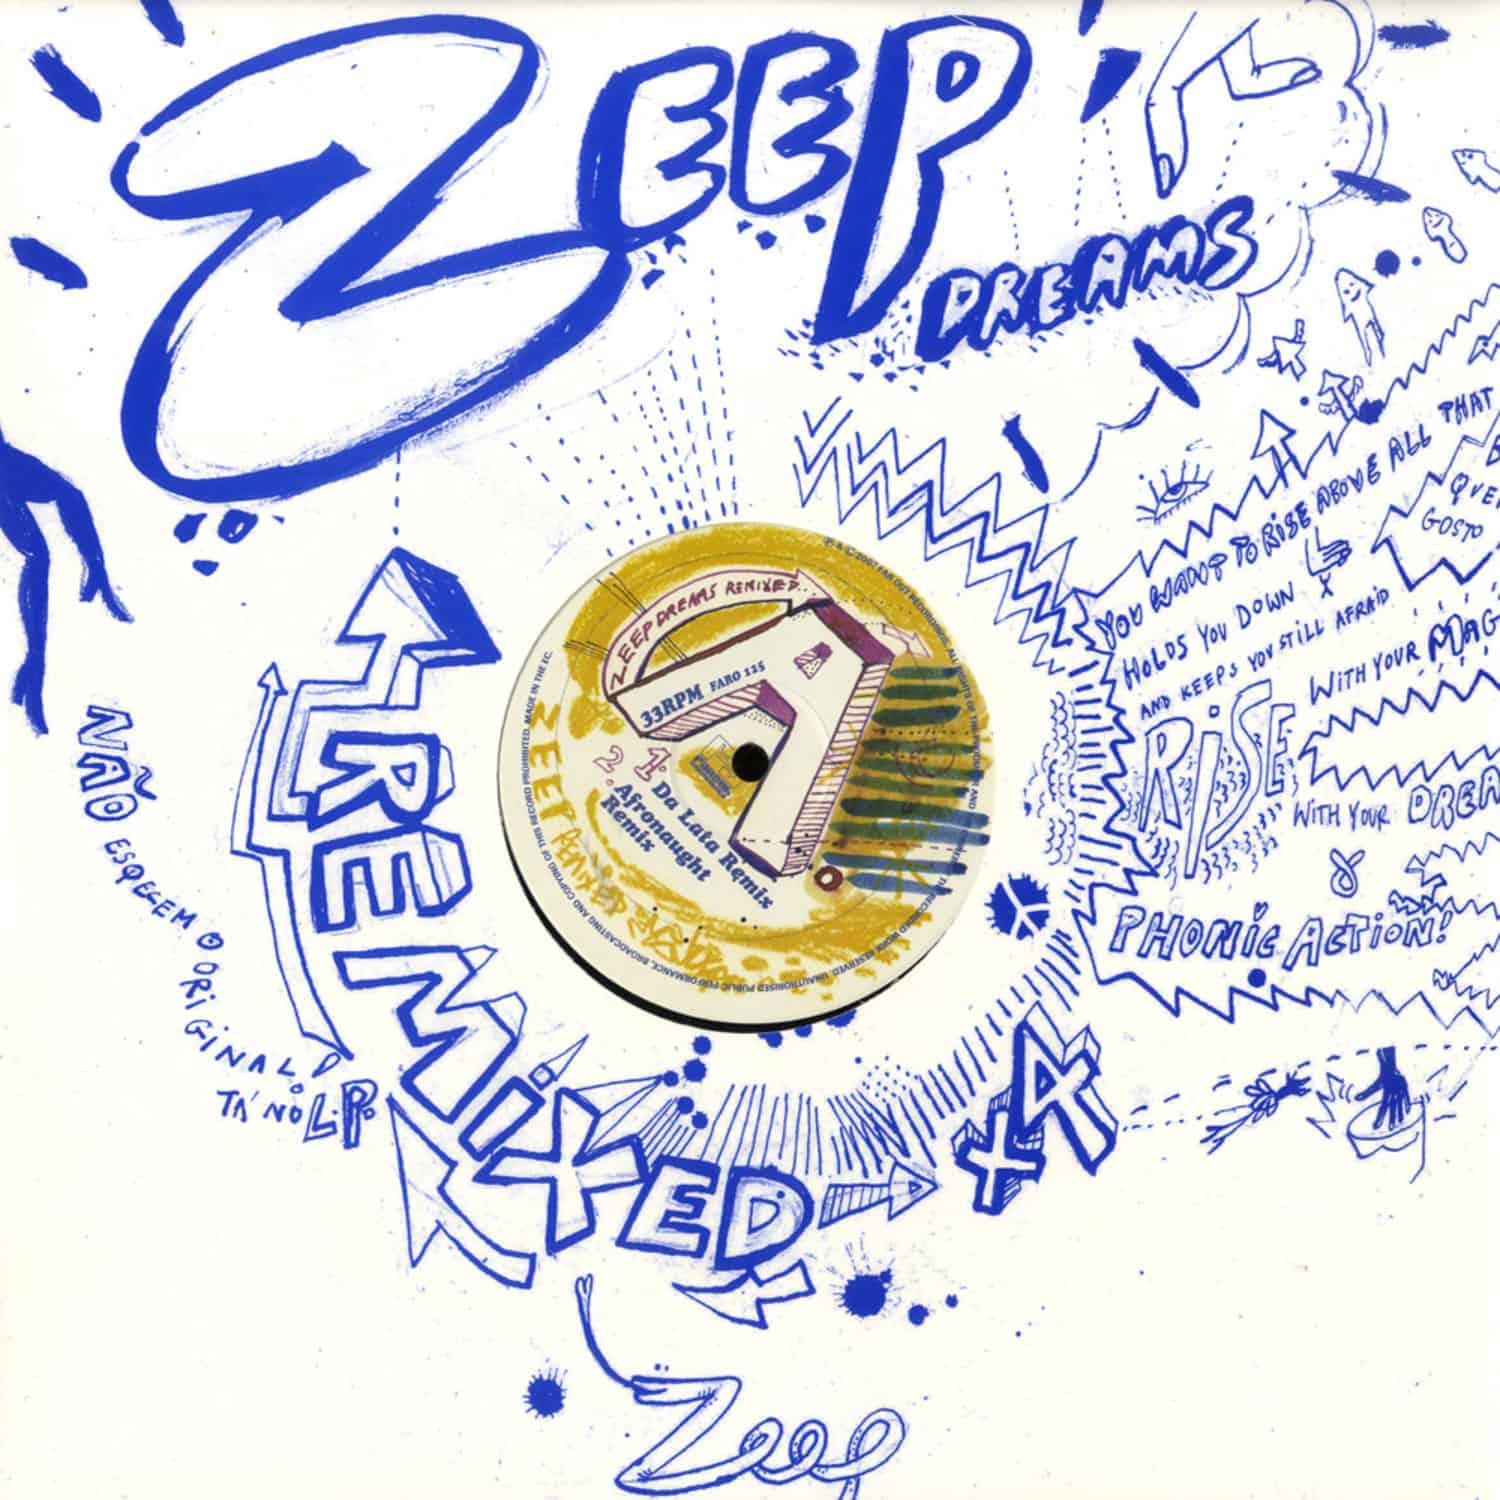 Zeep - ZEEP DREAMS REMIXED